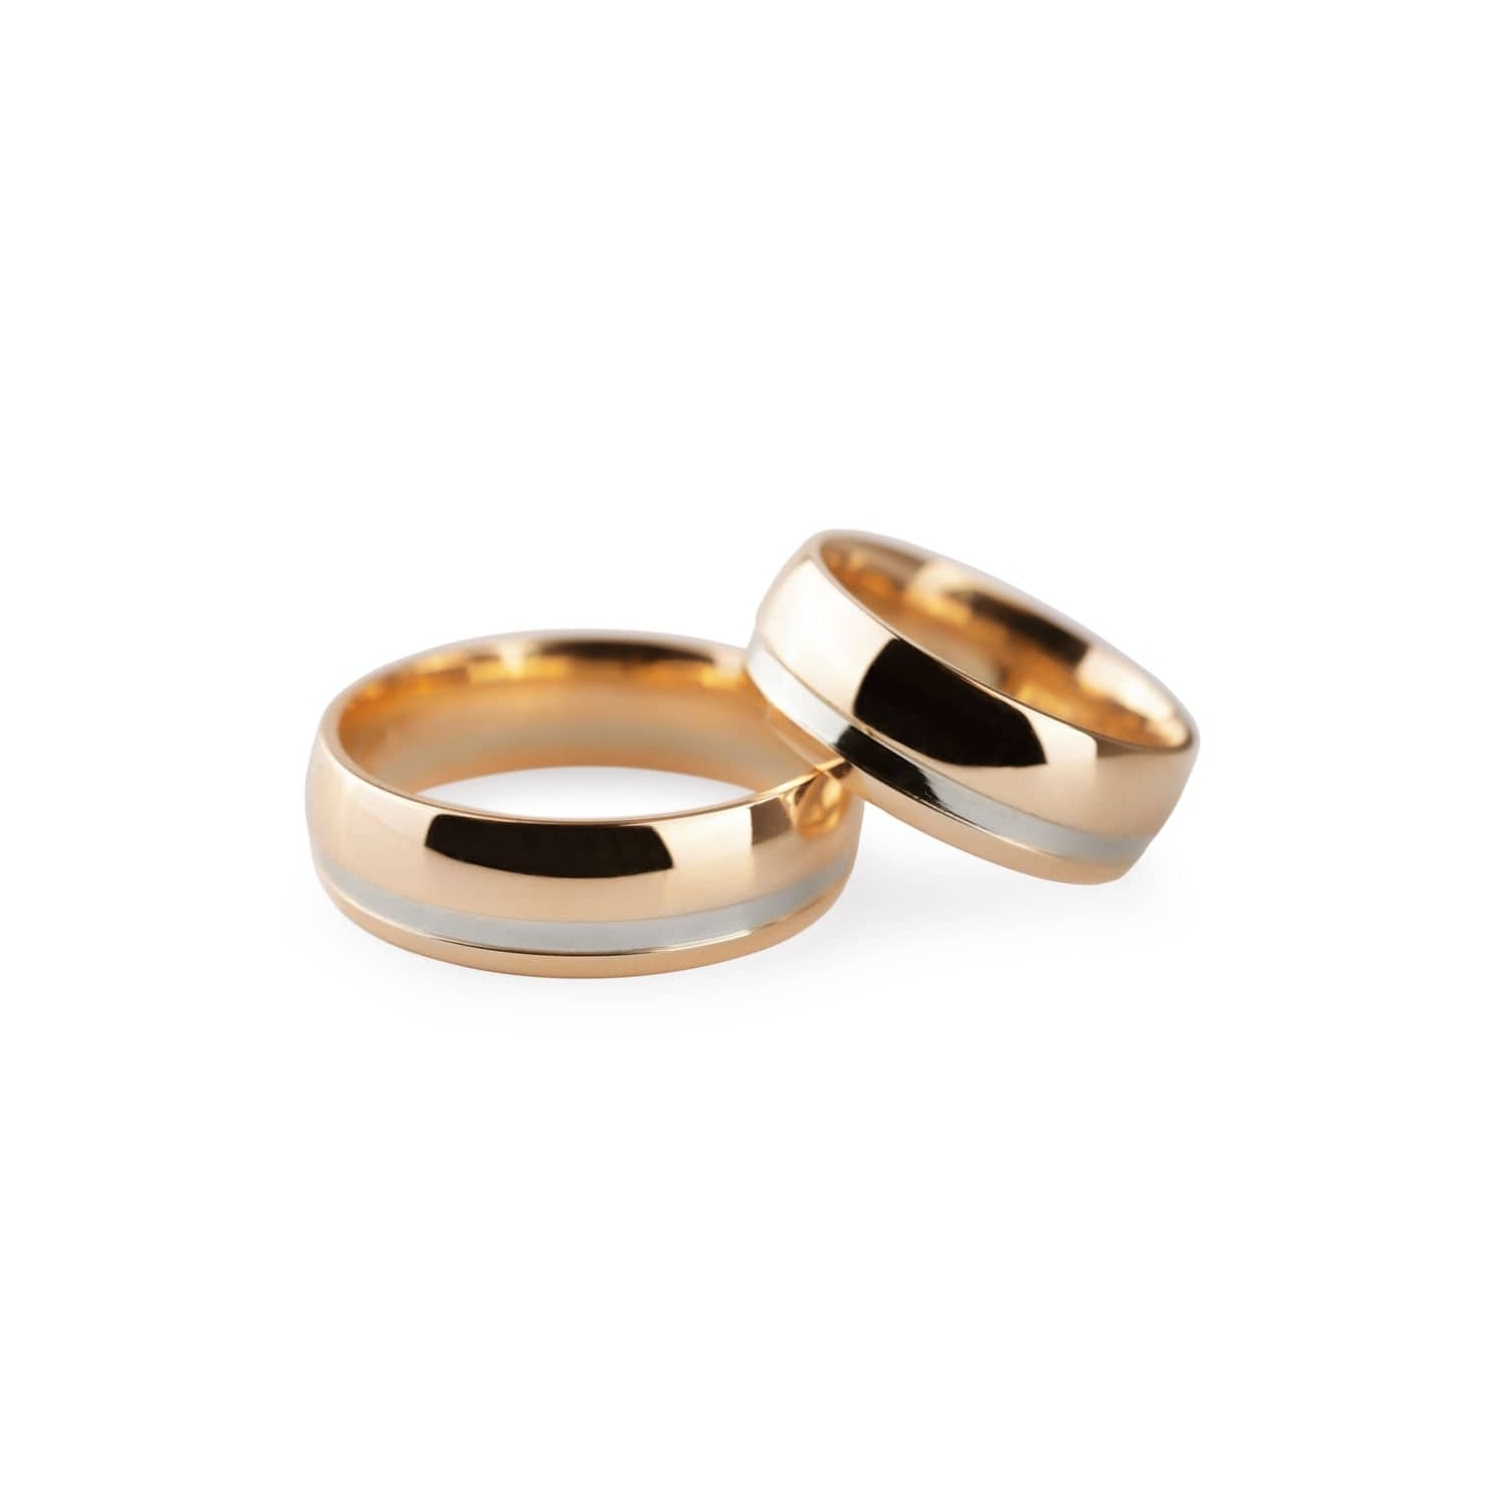 Gold wedding rings "VKA 313"